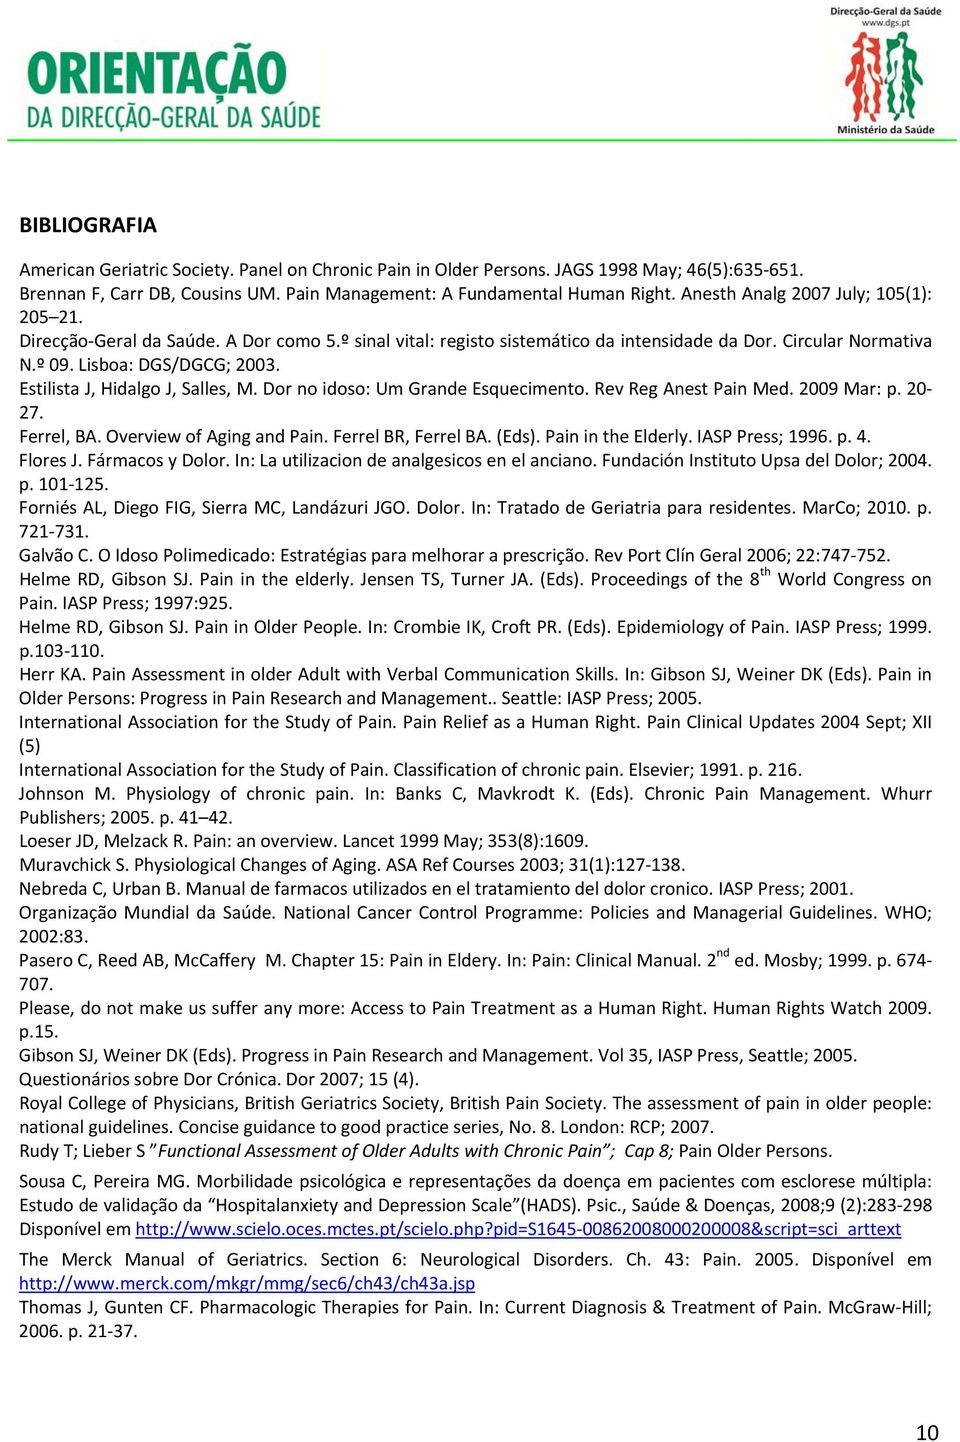 Estilista J, Hidalgo J, Salles, M. Dor no idoso: Um Grande Esquecimento. Rev Reg Anest Pain Med. 2009 Mar: p. 20 27. Ferrel, BA. Overview of Aging and Pain. Ferrel BR, Ferrel BA. (Eds).